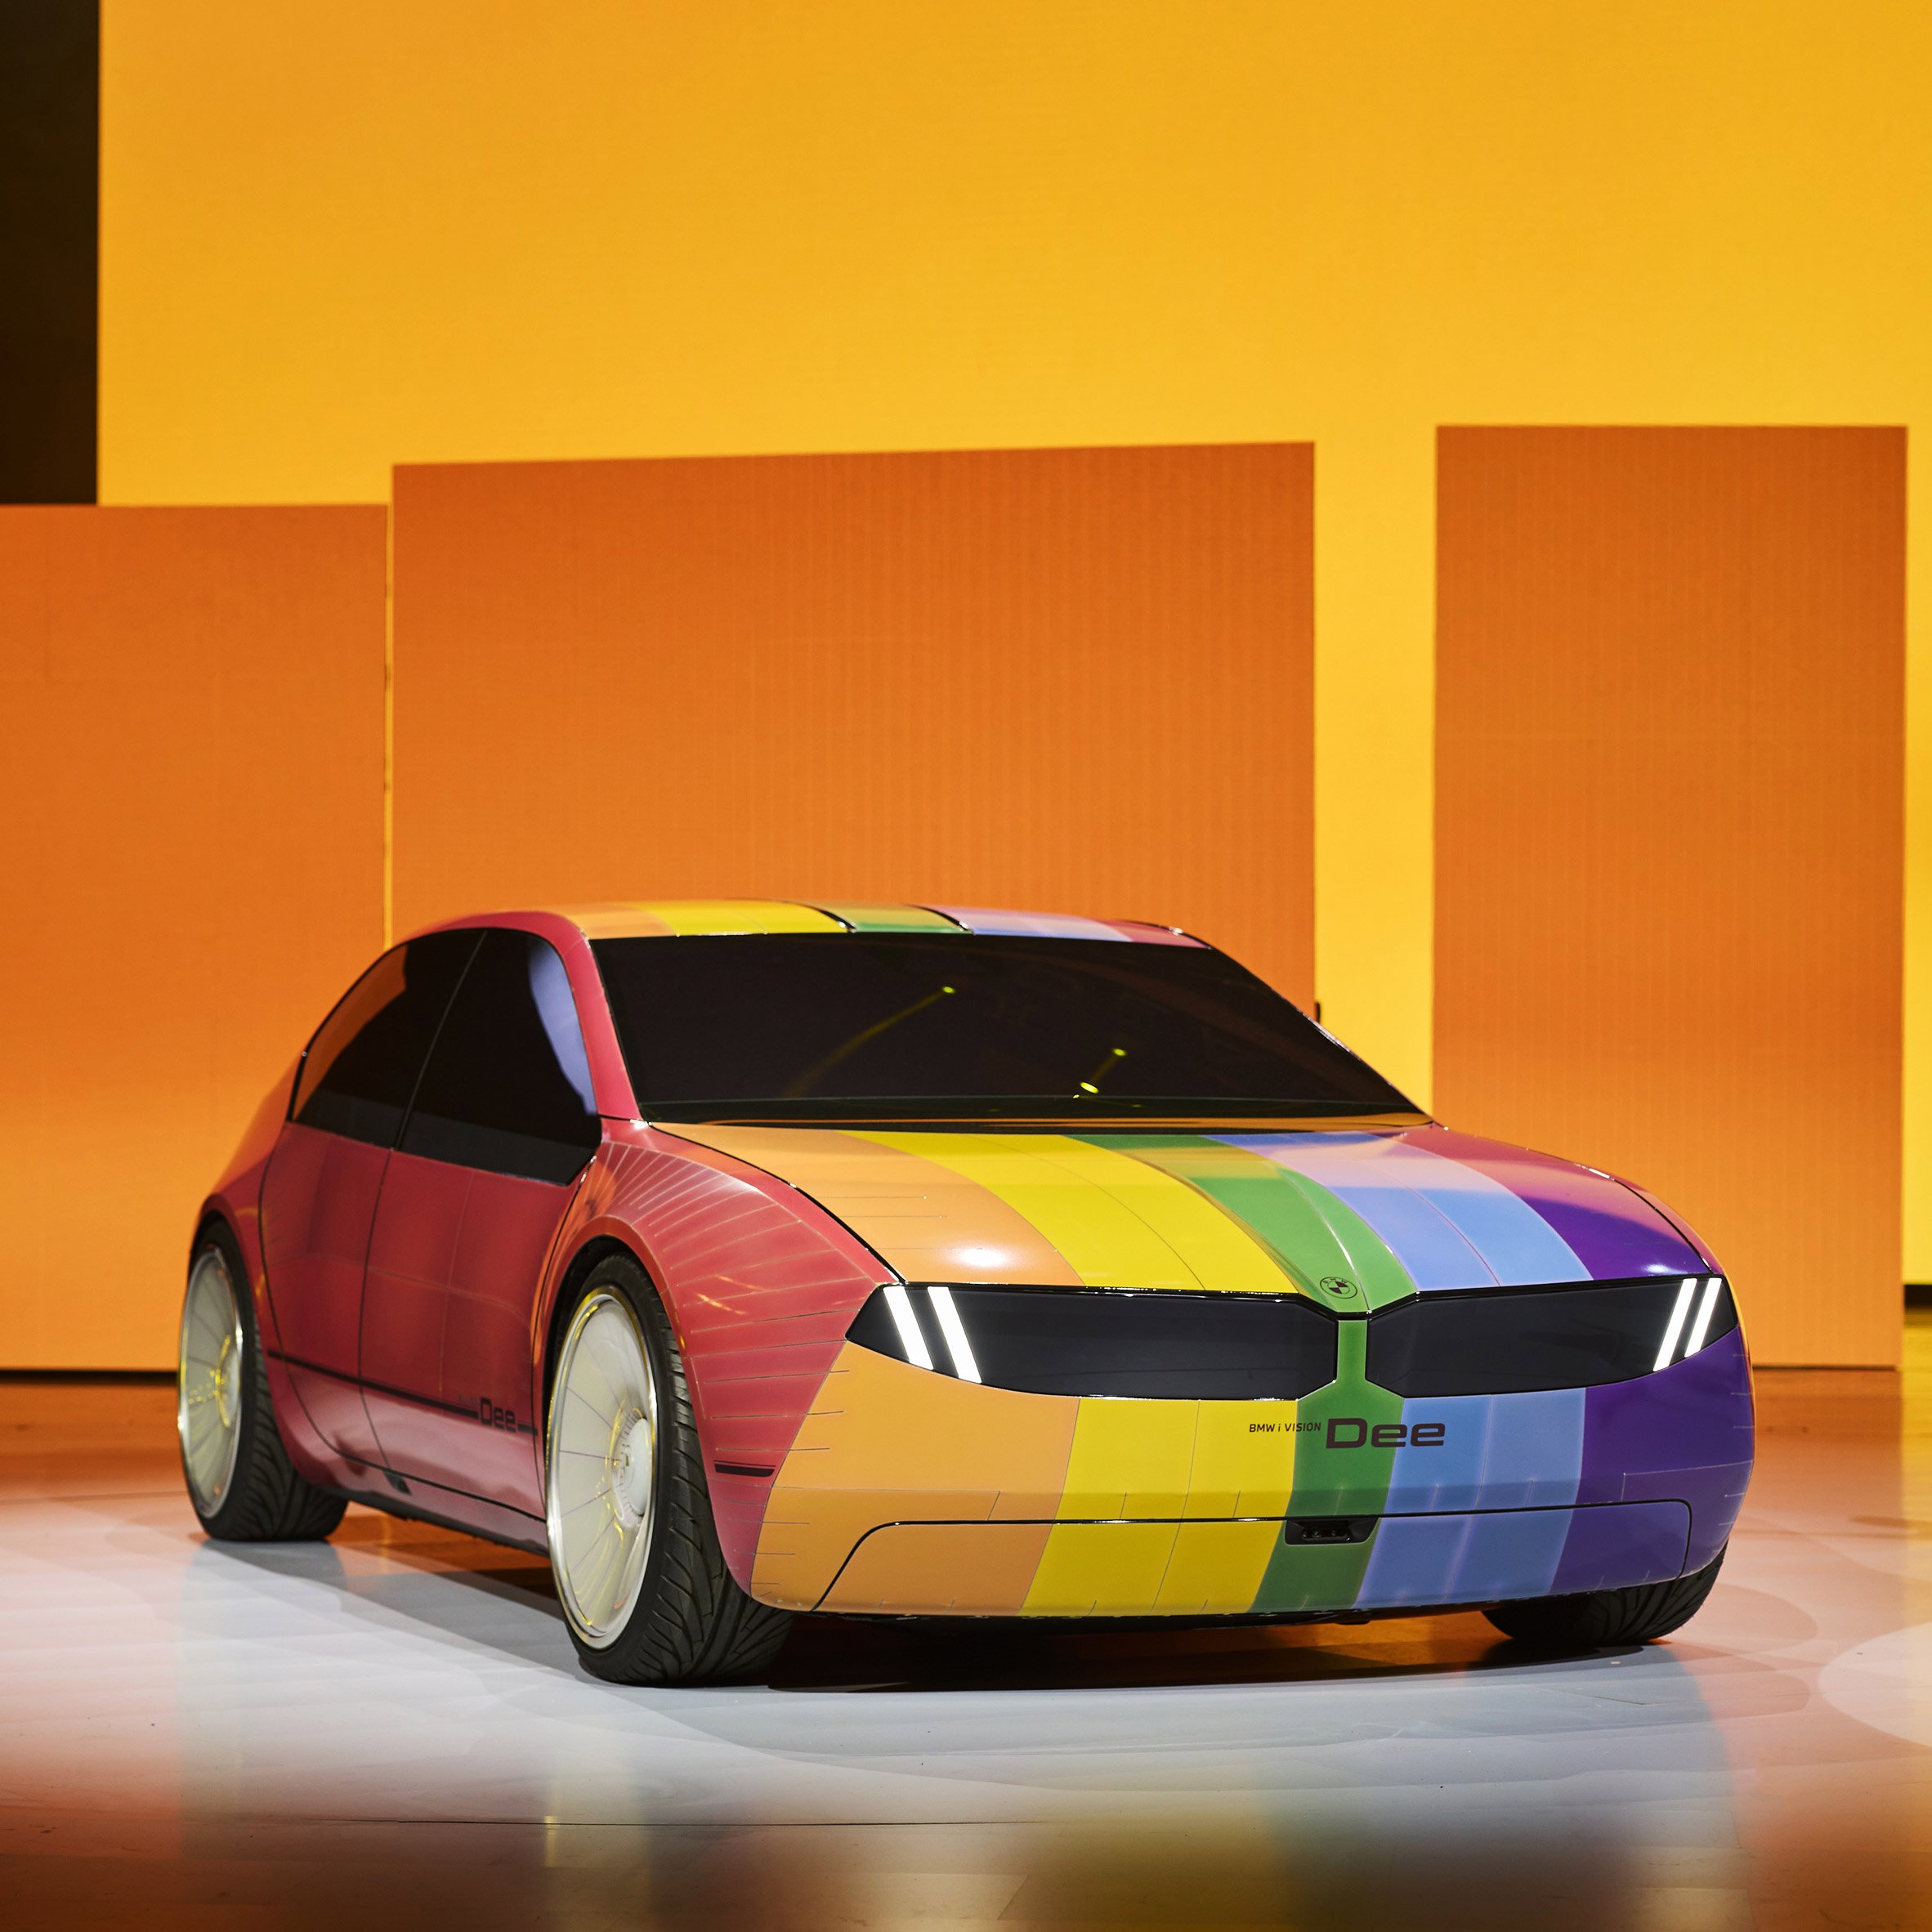 Change your car's colour with an app: BMW unveils colour-changing car